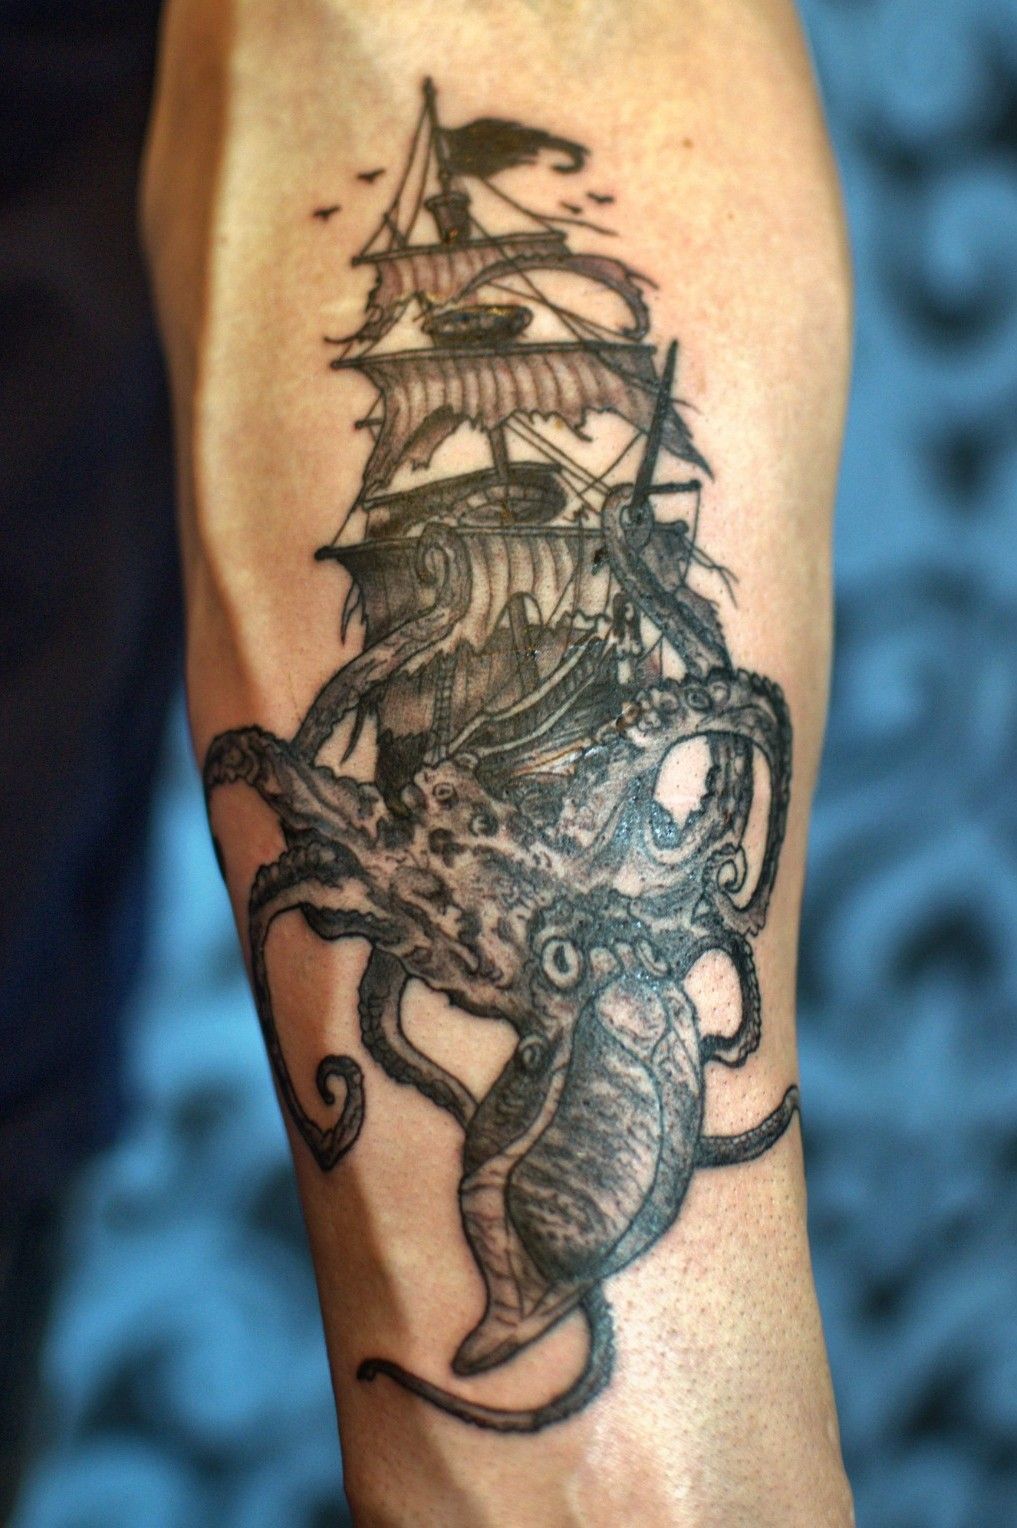 Illustrative style Sailing ship and Kraken tattoo on